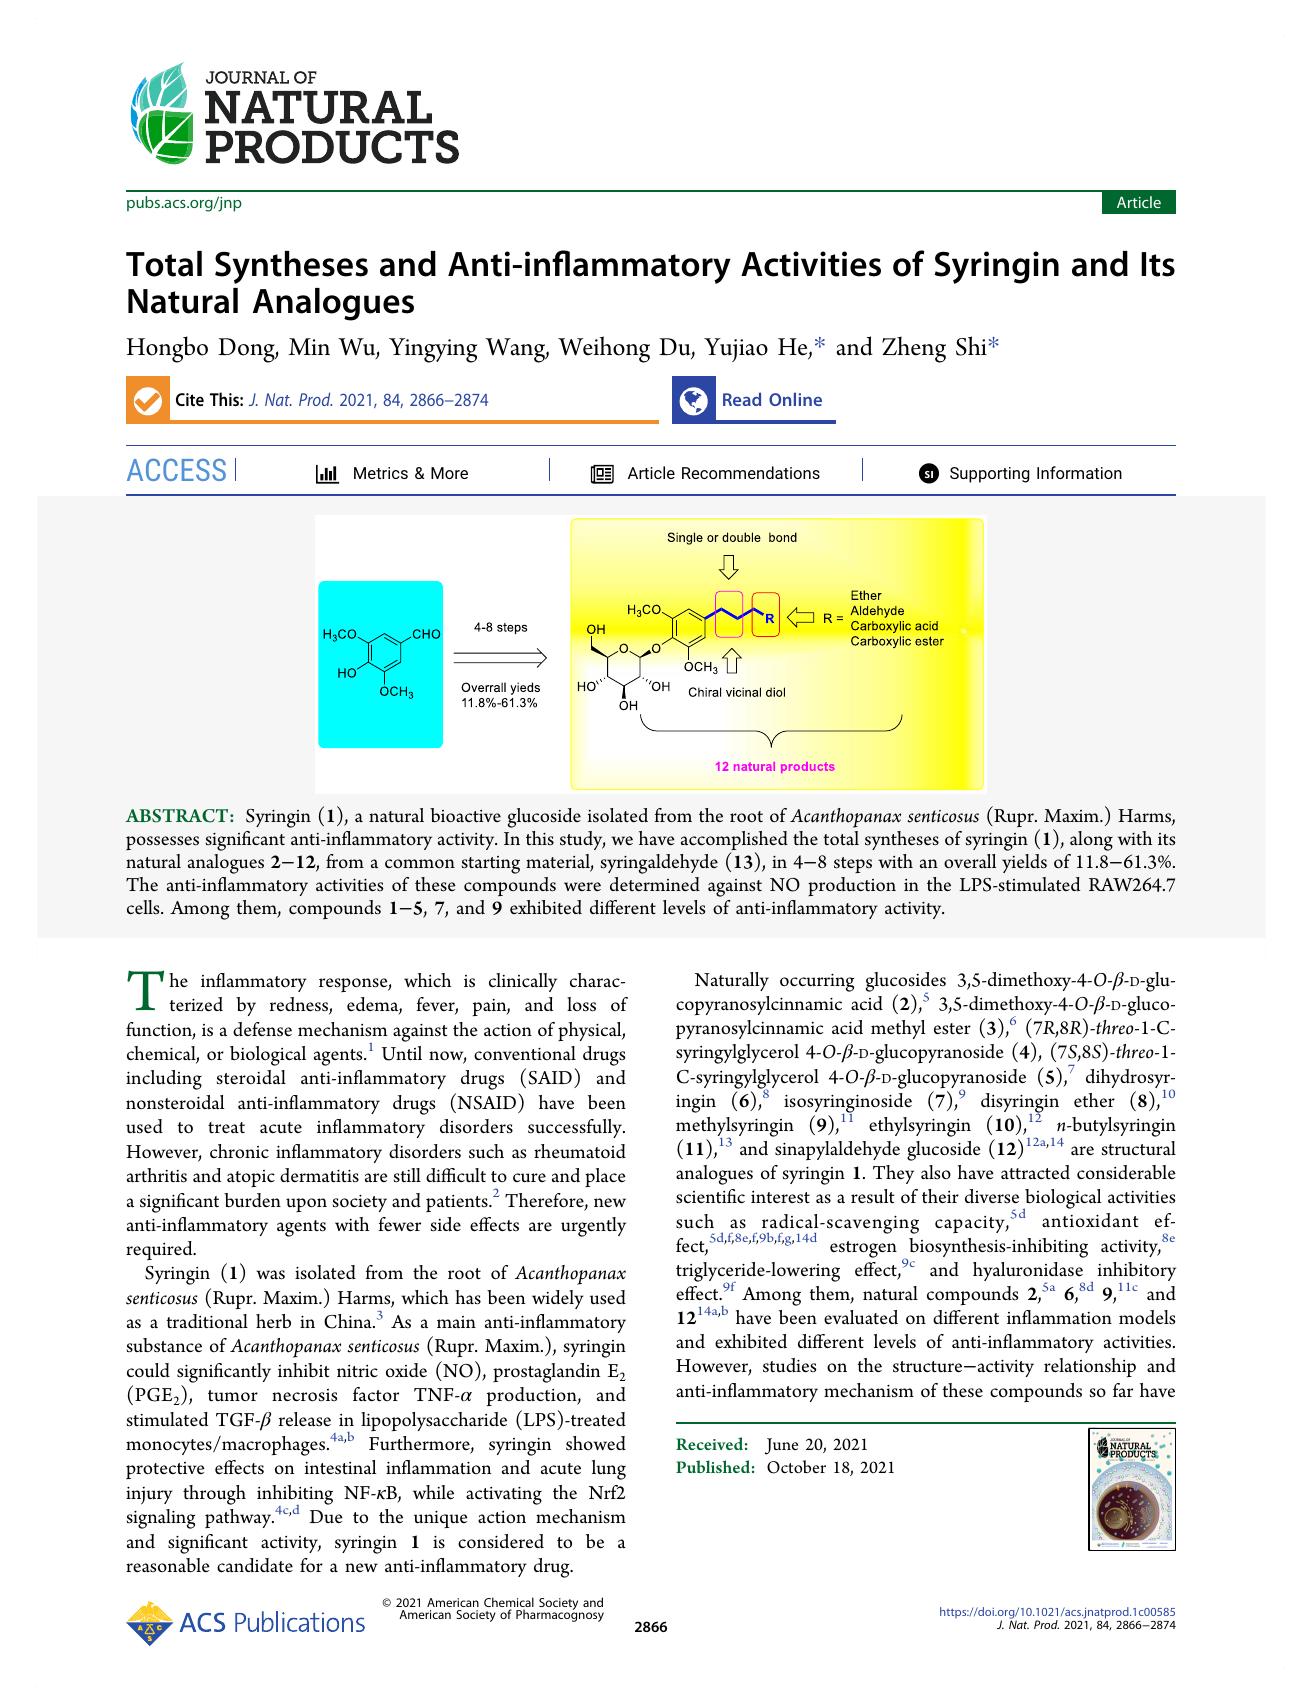 Total Syntheses and Anti-inflammatory Activities of Syringin and Its Natural Analogues by Hongbo Dong Min Wu Yingying Wang Weihong Du Yujiao He and Zheng Shi